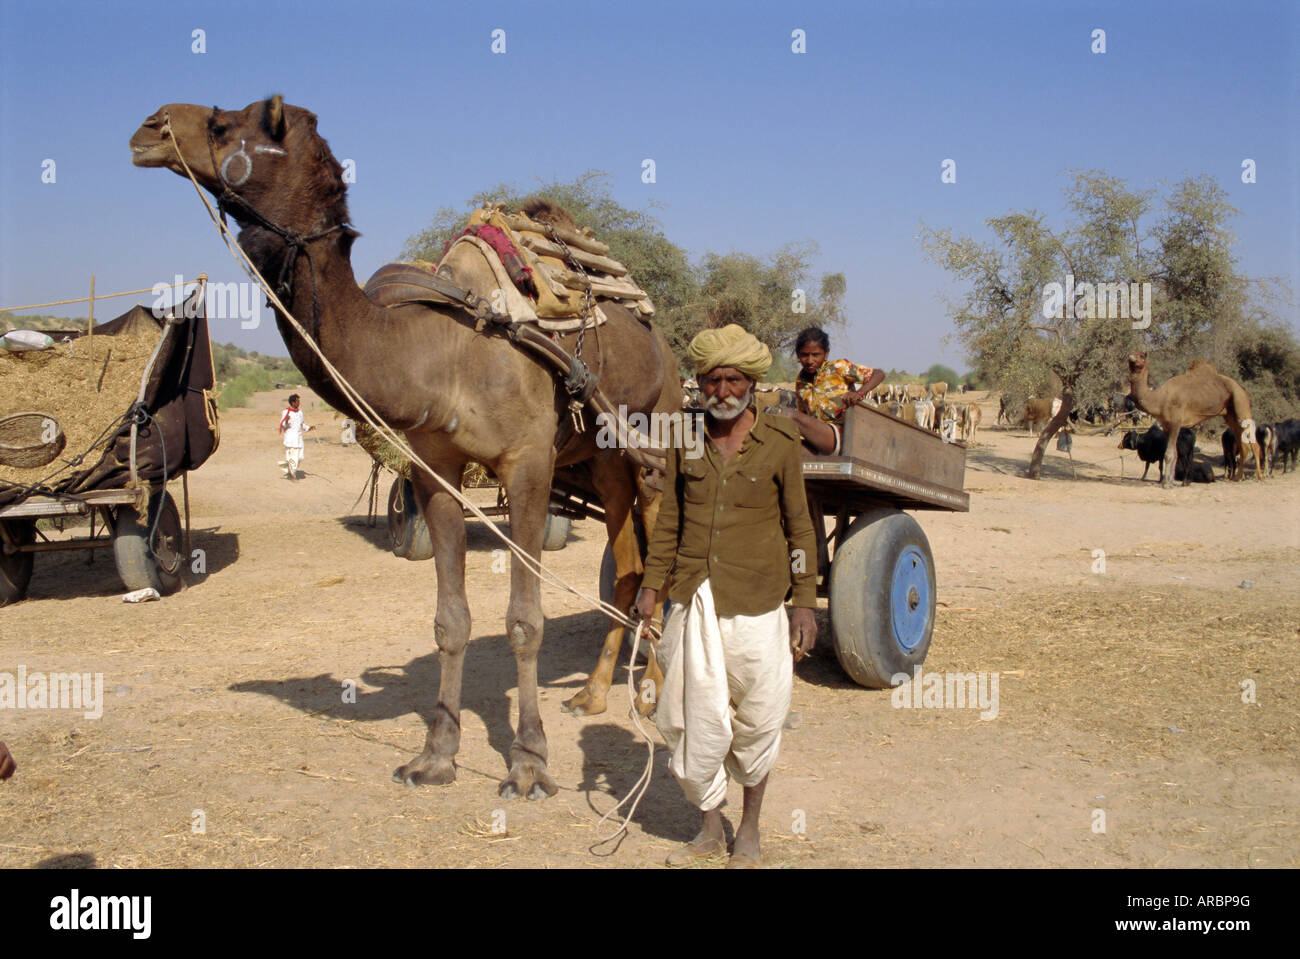 Livestock fair near Dechhu, north of Jodhpur, Rajasthan, India Stock Photo